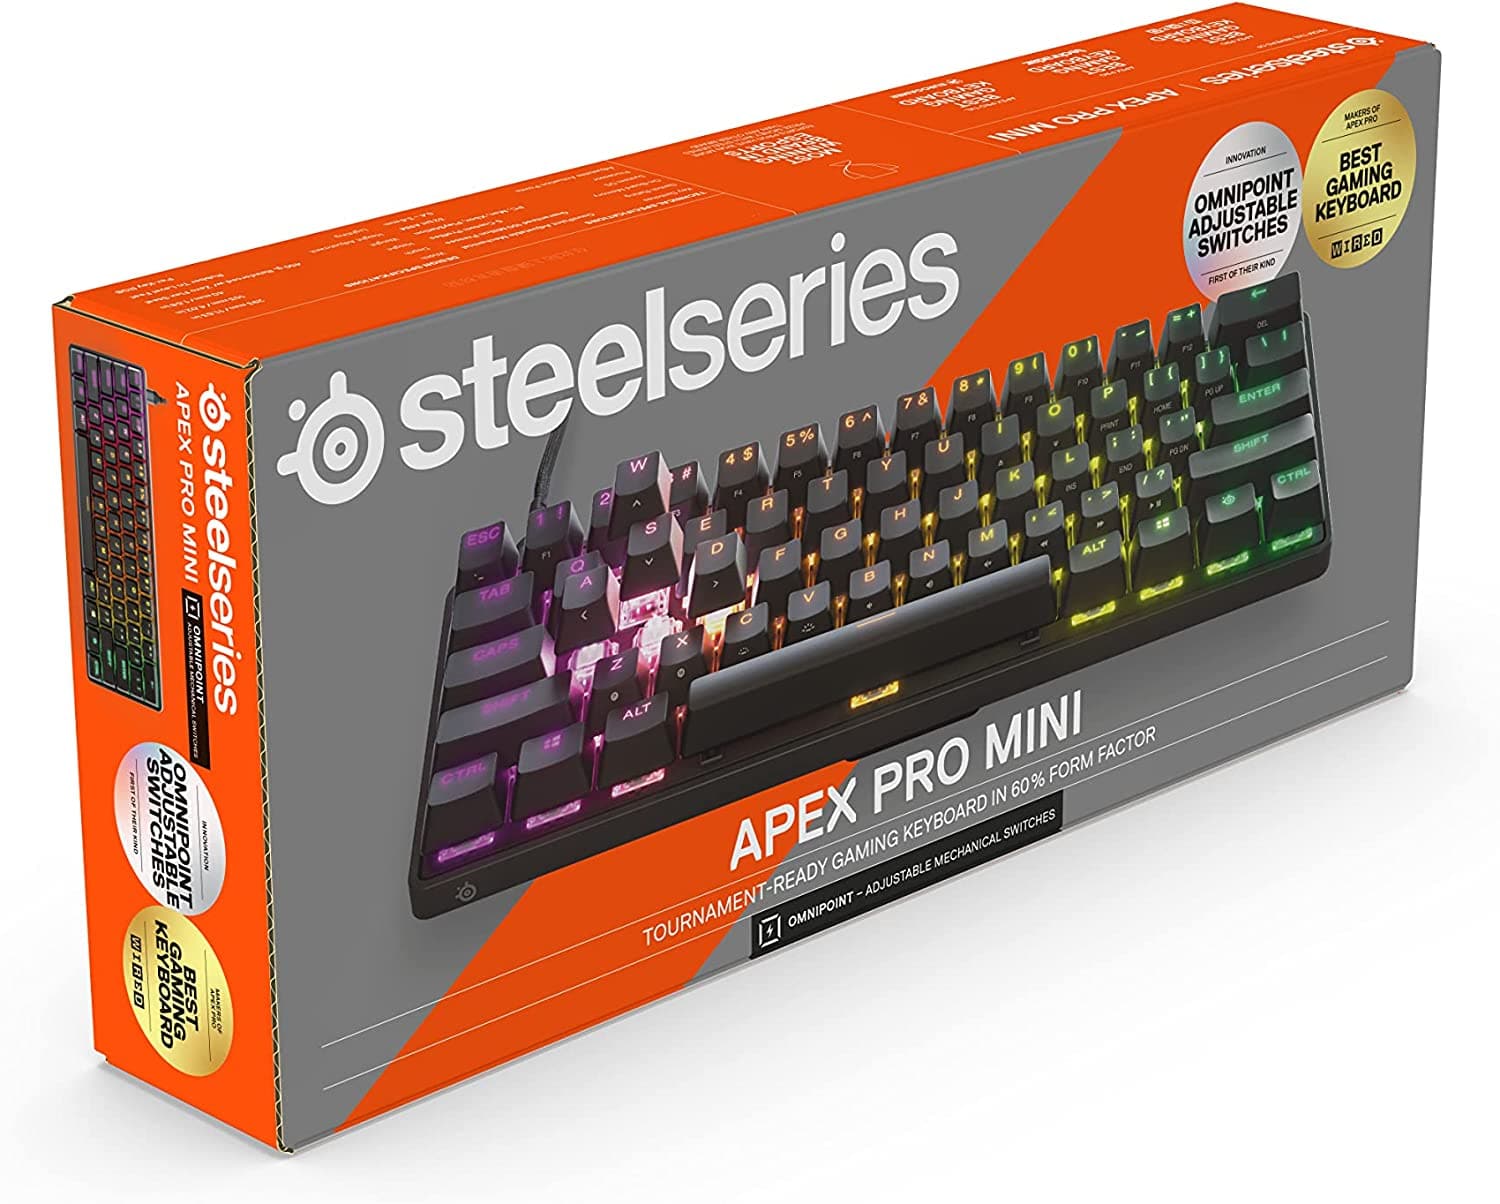 SteelSeries Apex Pro USB Keyboard - OmniPoint Adjustable Key